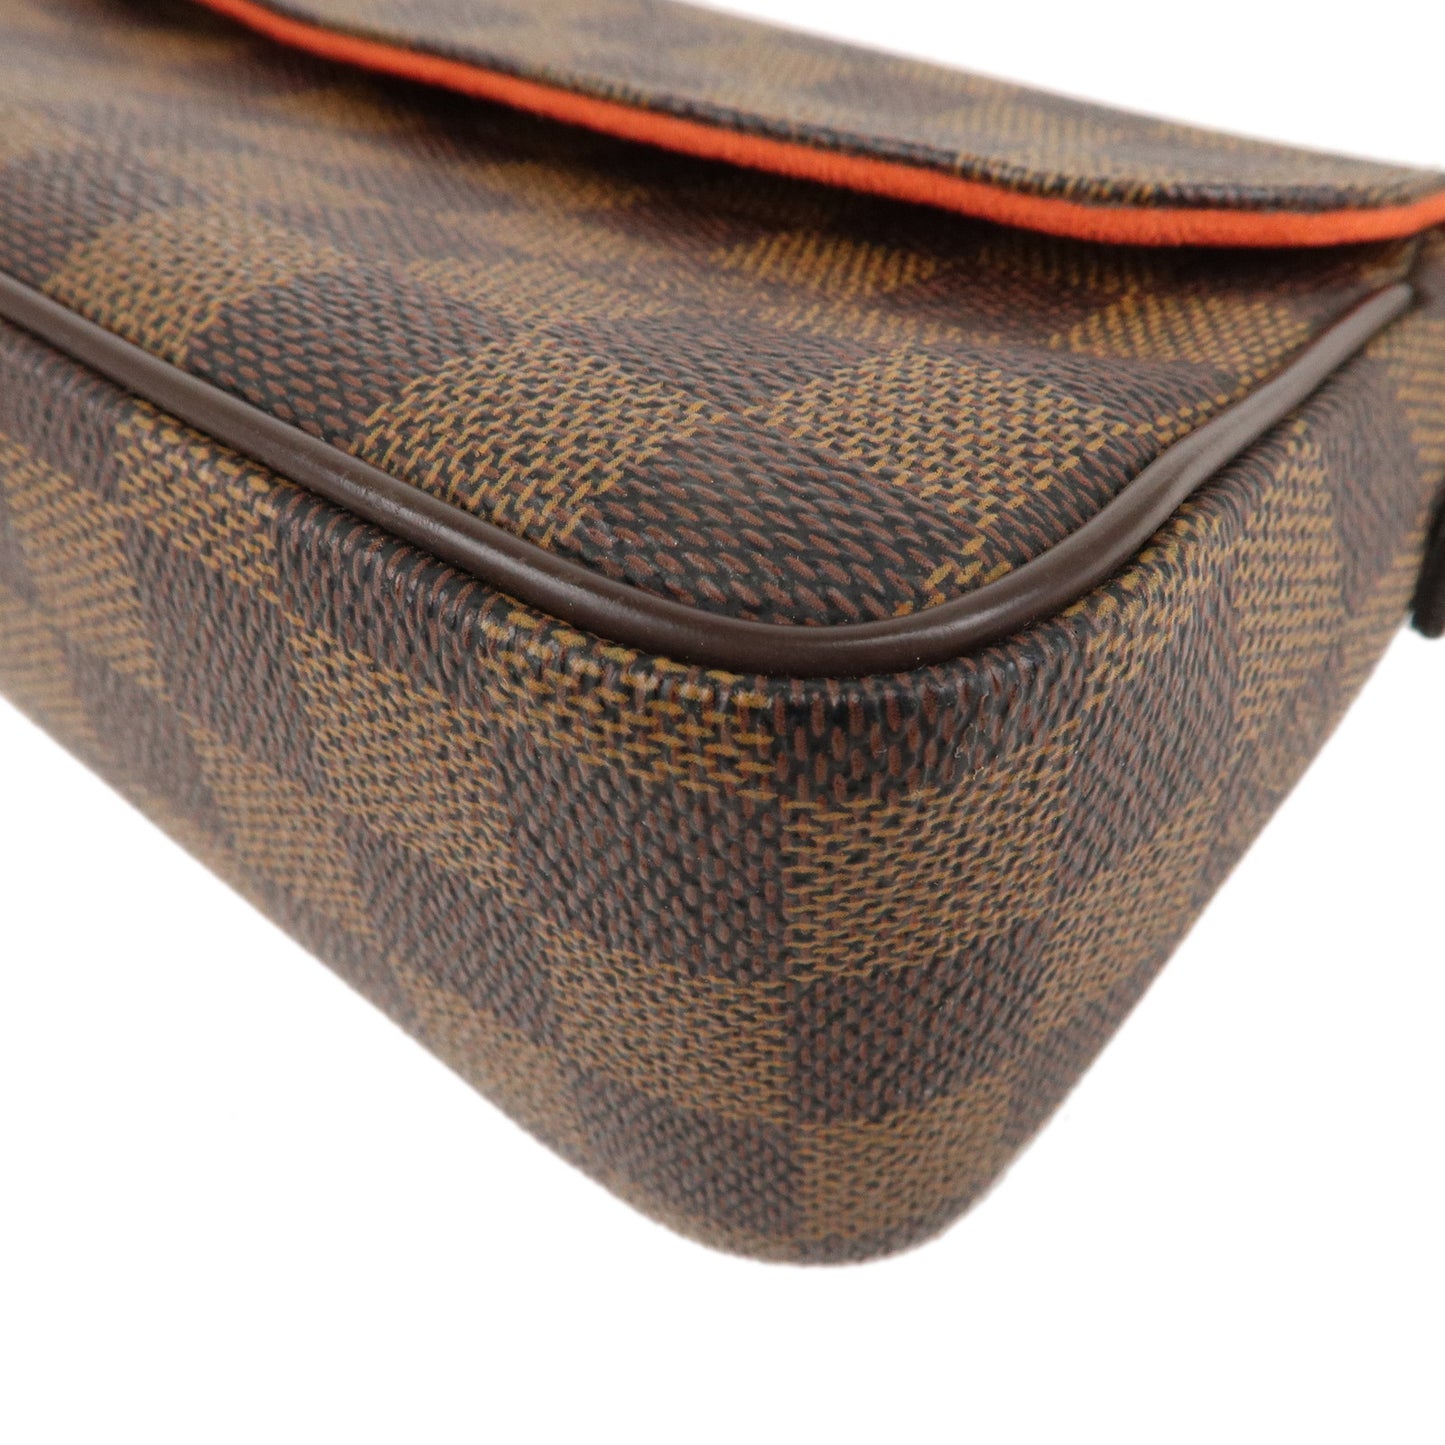 Louis Vuitton Damier Recolator Shoulder Bag M51299